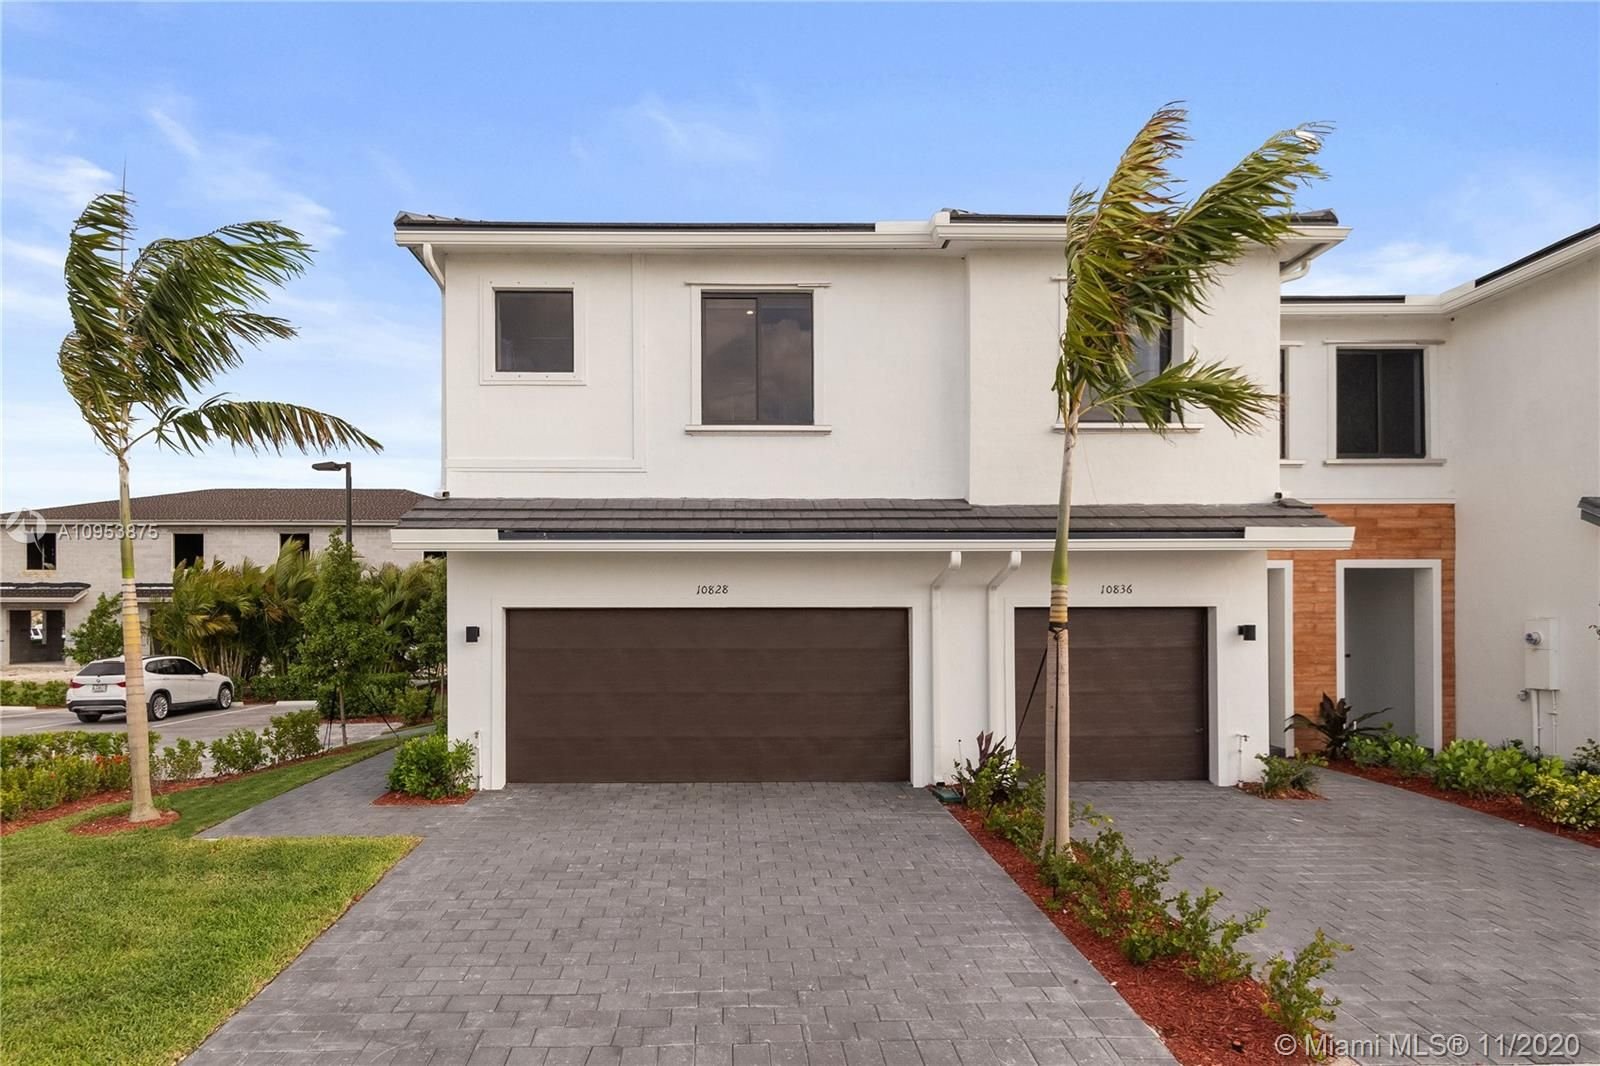 Real estate property located at 10974 235th St, Miami-Dade County, Miami, FL